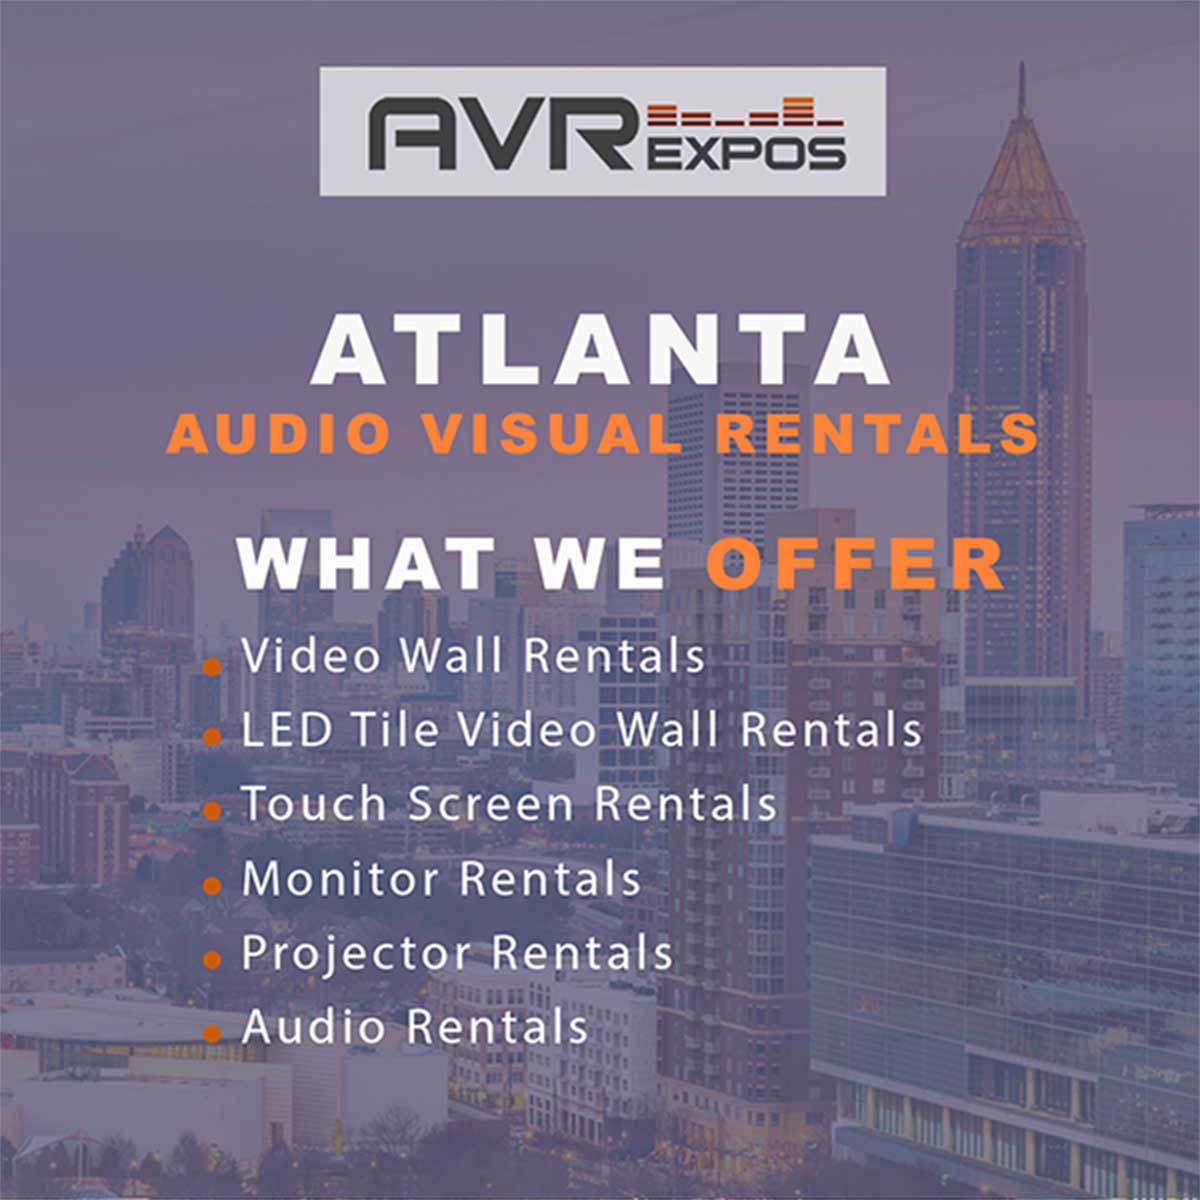 Atlanta Audio Visual Rentals | Equipment Rental | AVR Atlanta